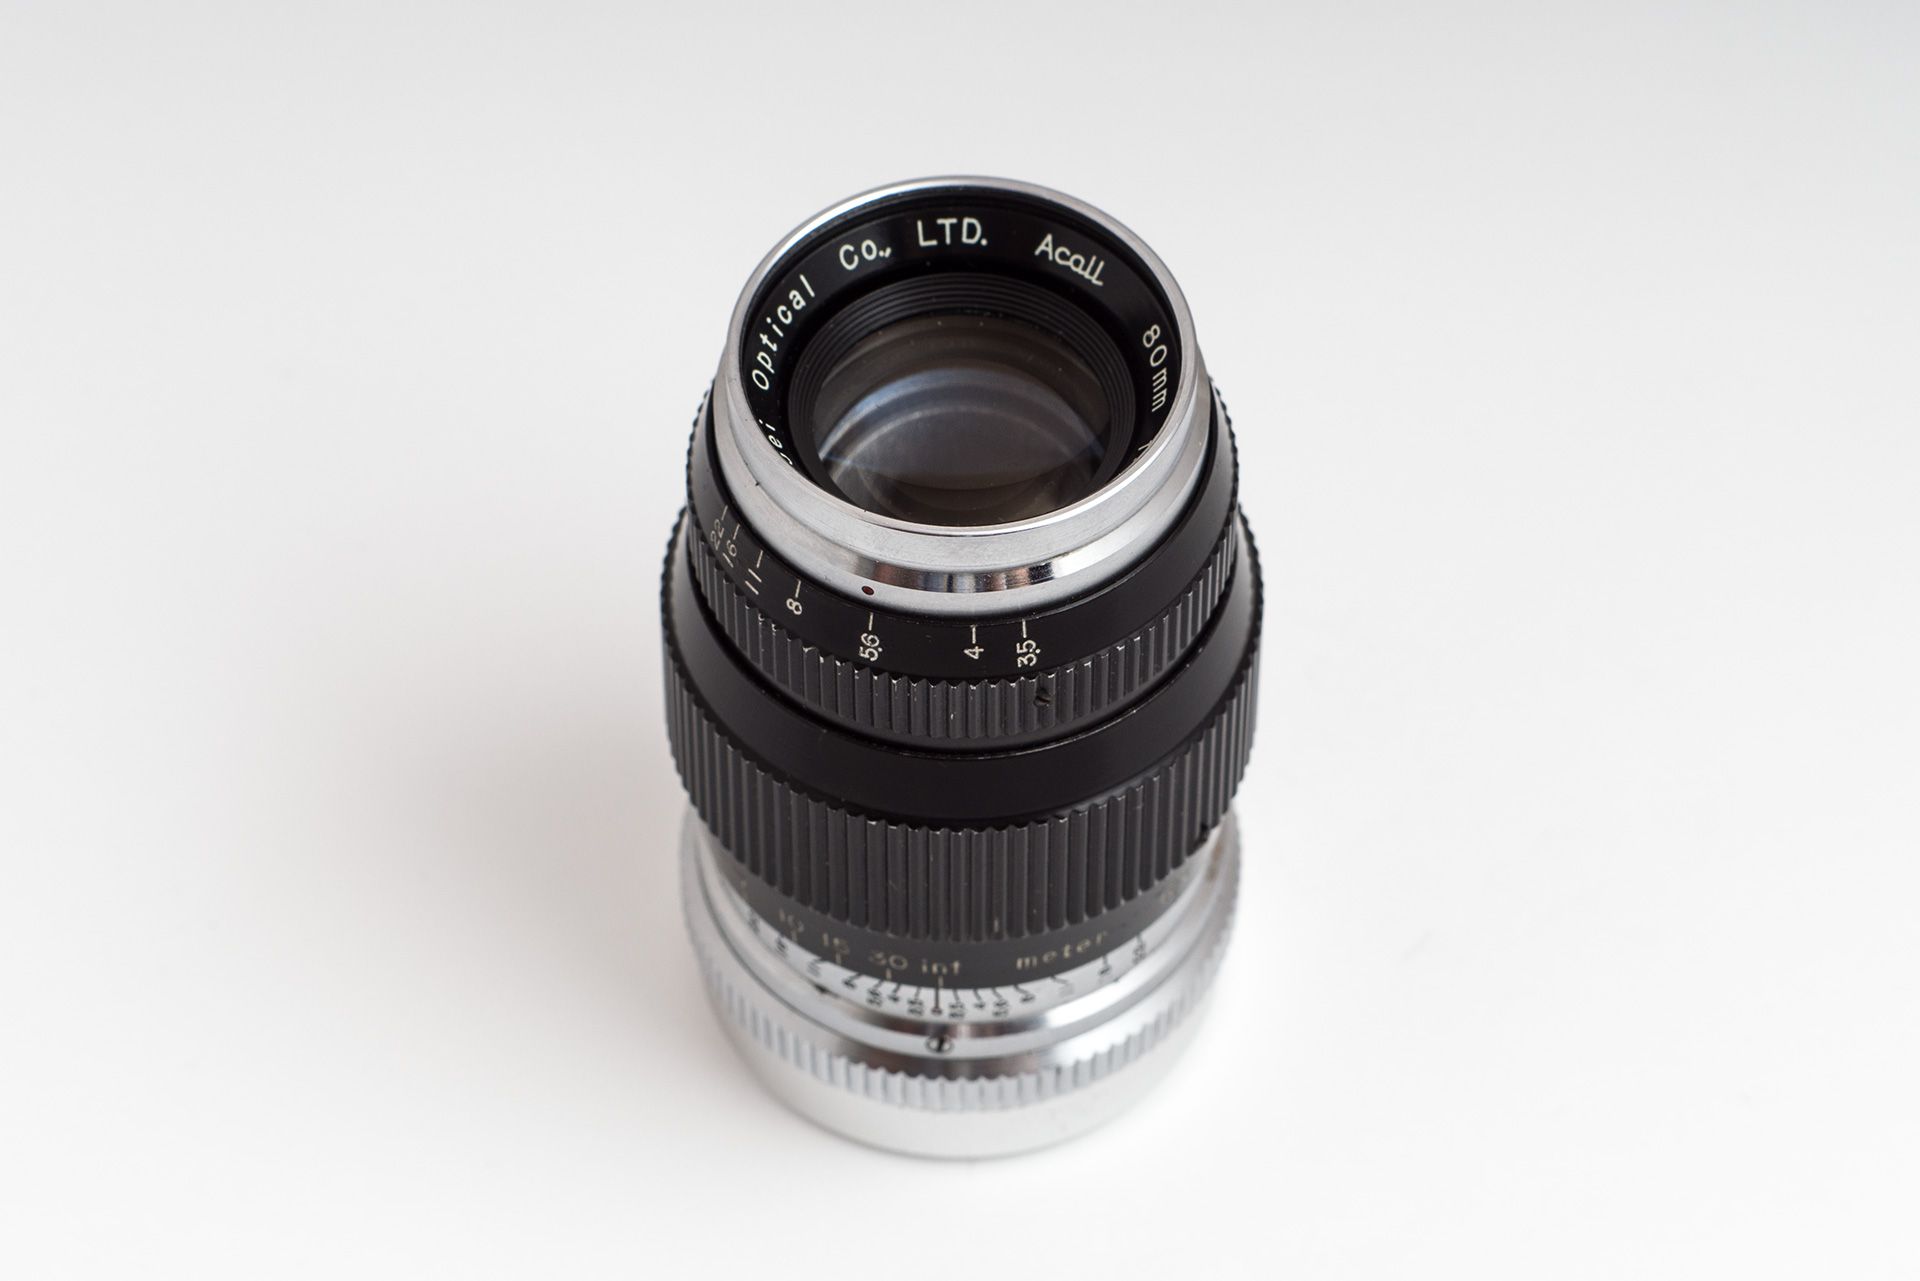 Kyoei Optical Co. LTD. Acall 80mm f/3.5